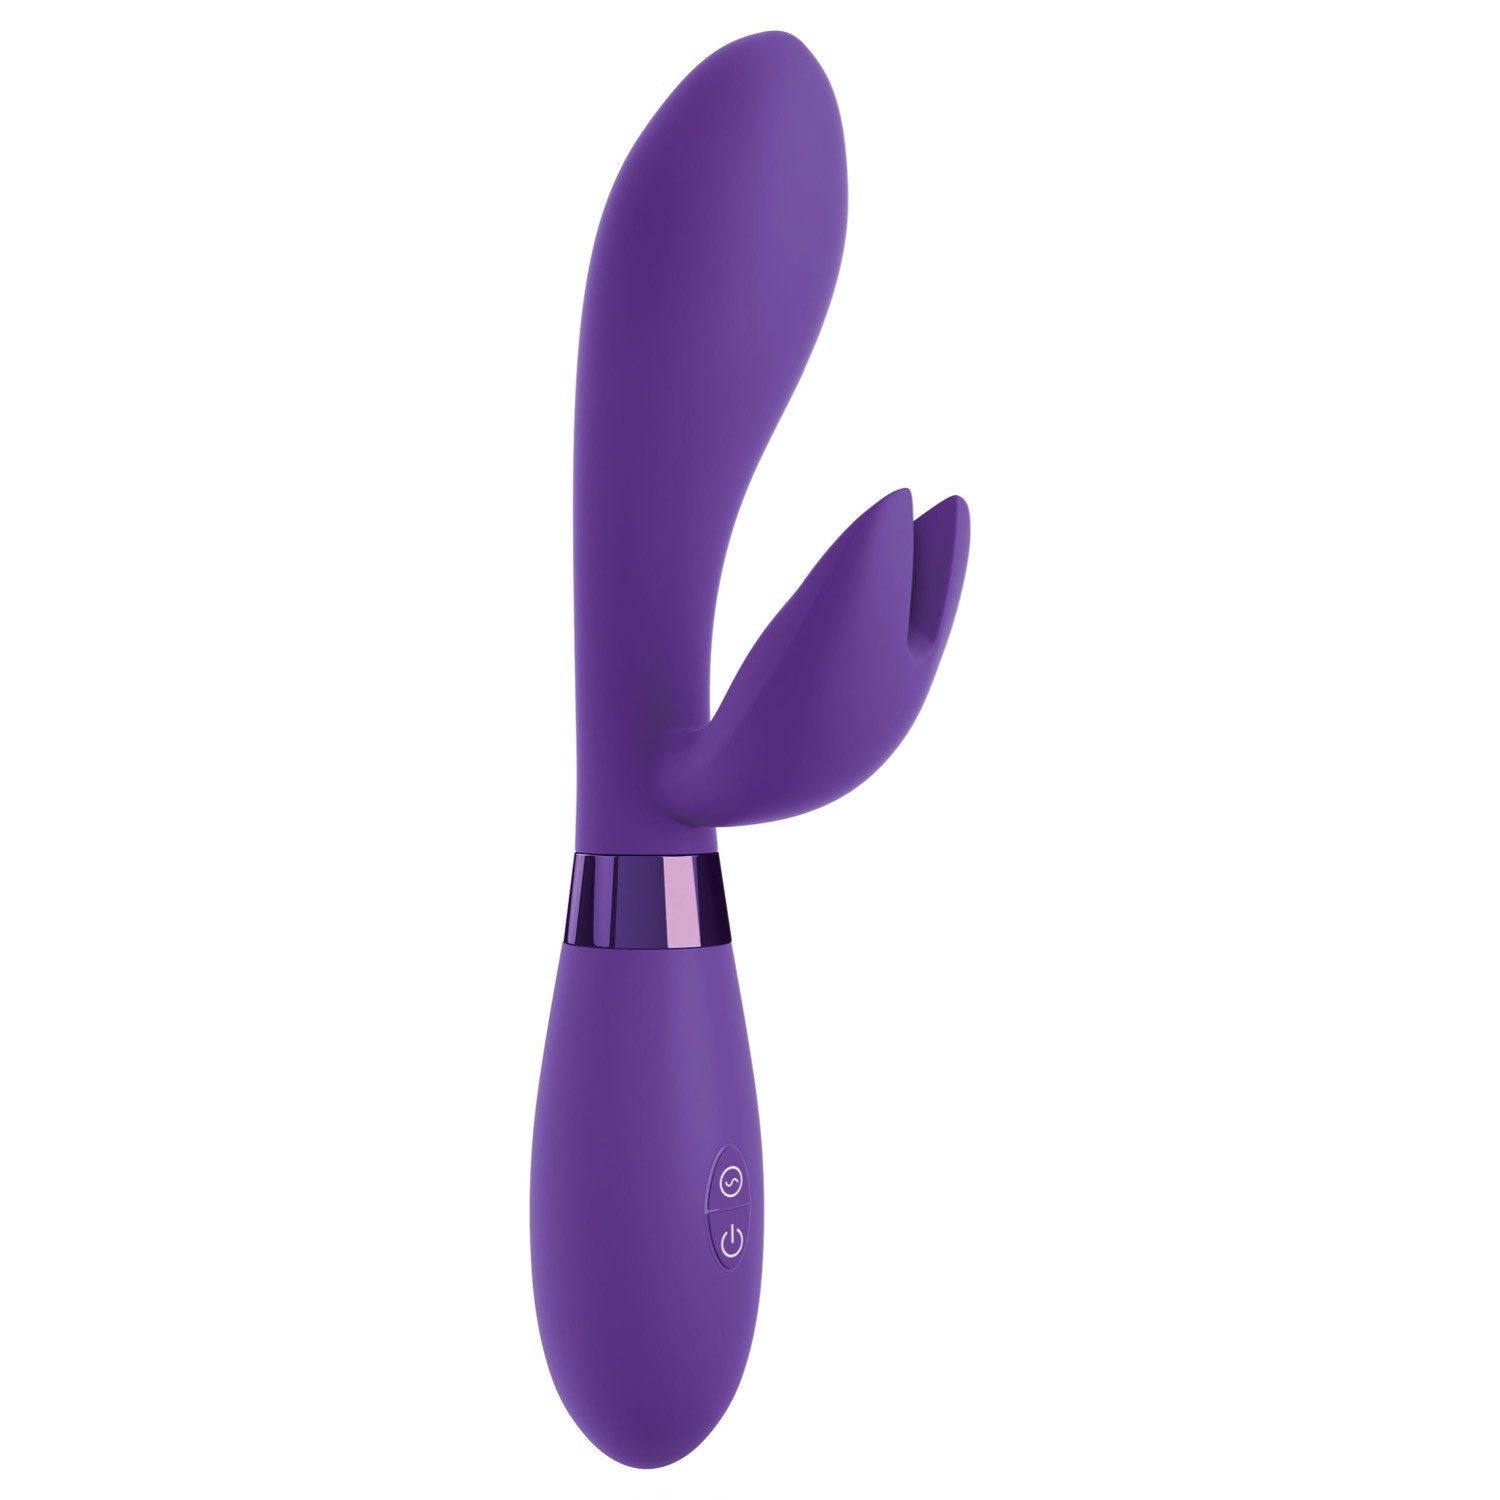 Omg! OMG! Rabbits #Bestever - Purple Rabbit Vibrator by Pipedream